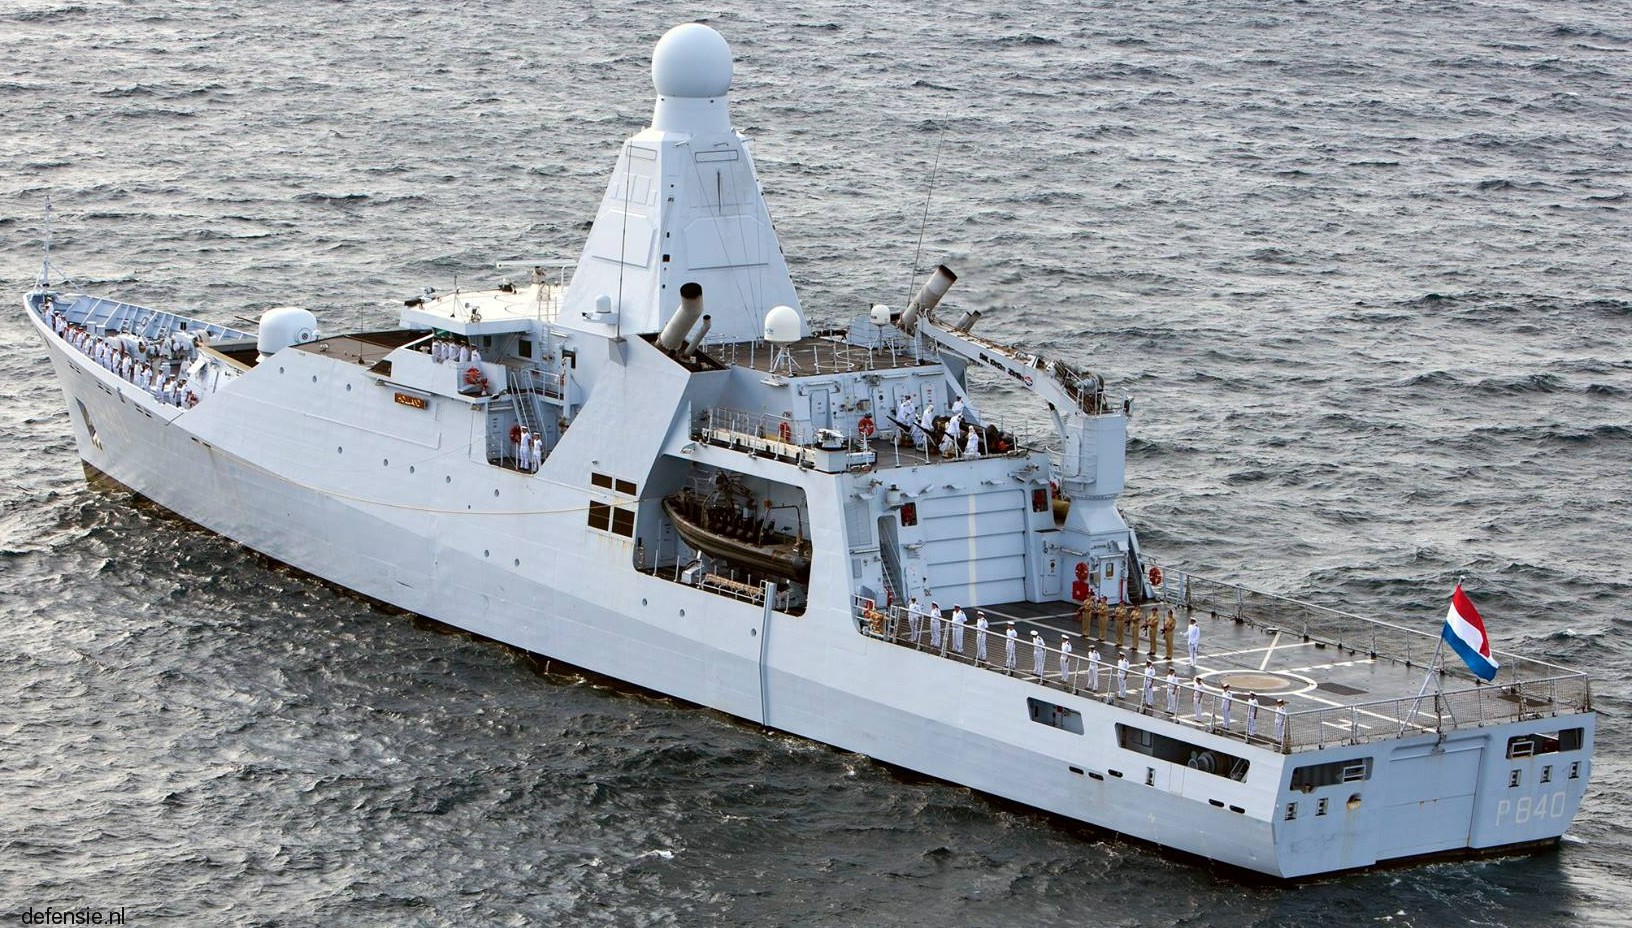 p-840 hnlms holland offshore patrol vessel opv royal netherlands navy 14